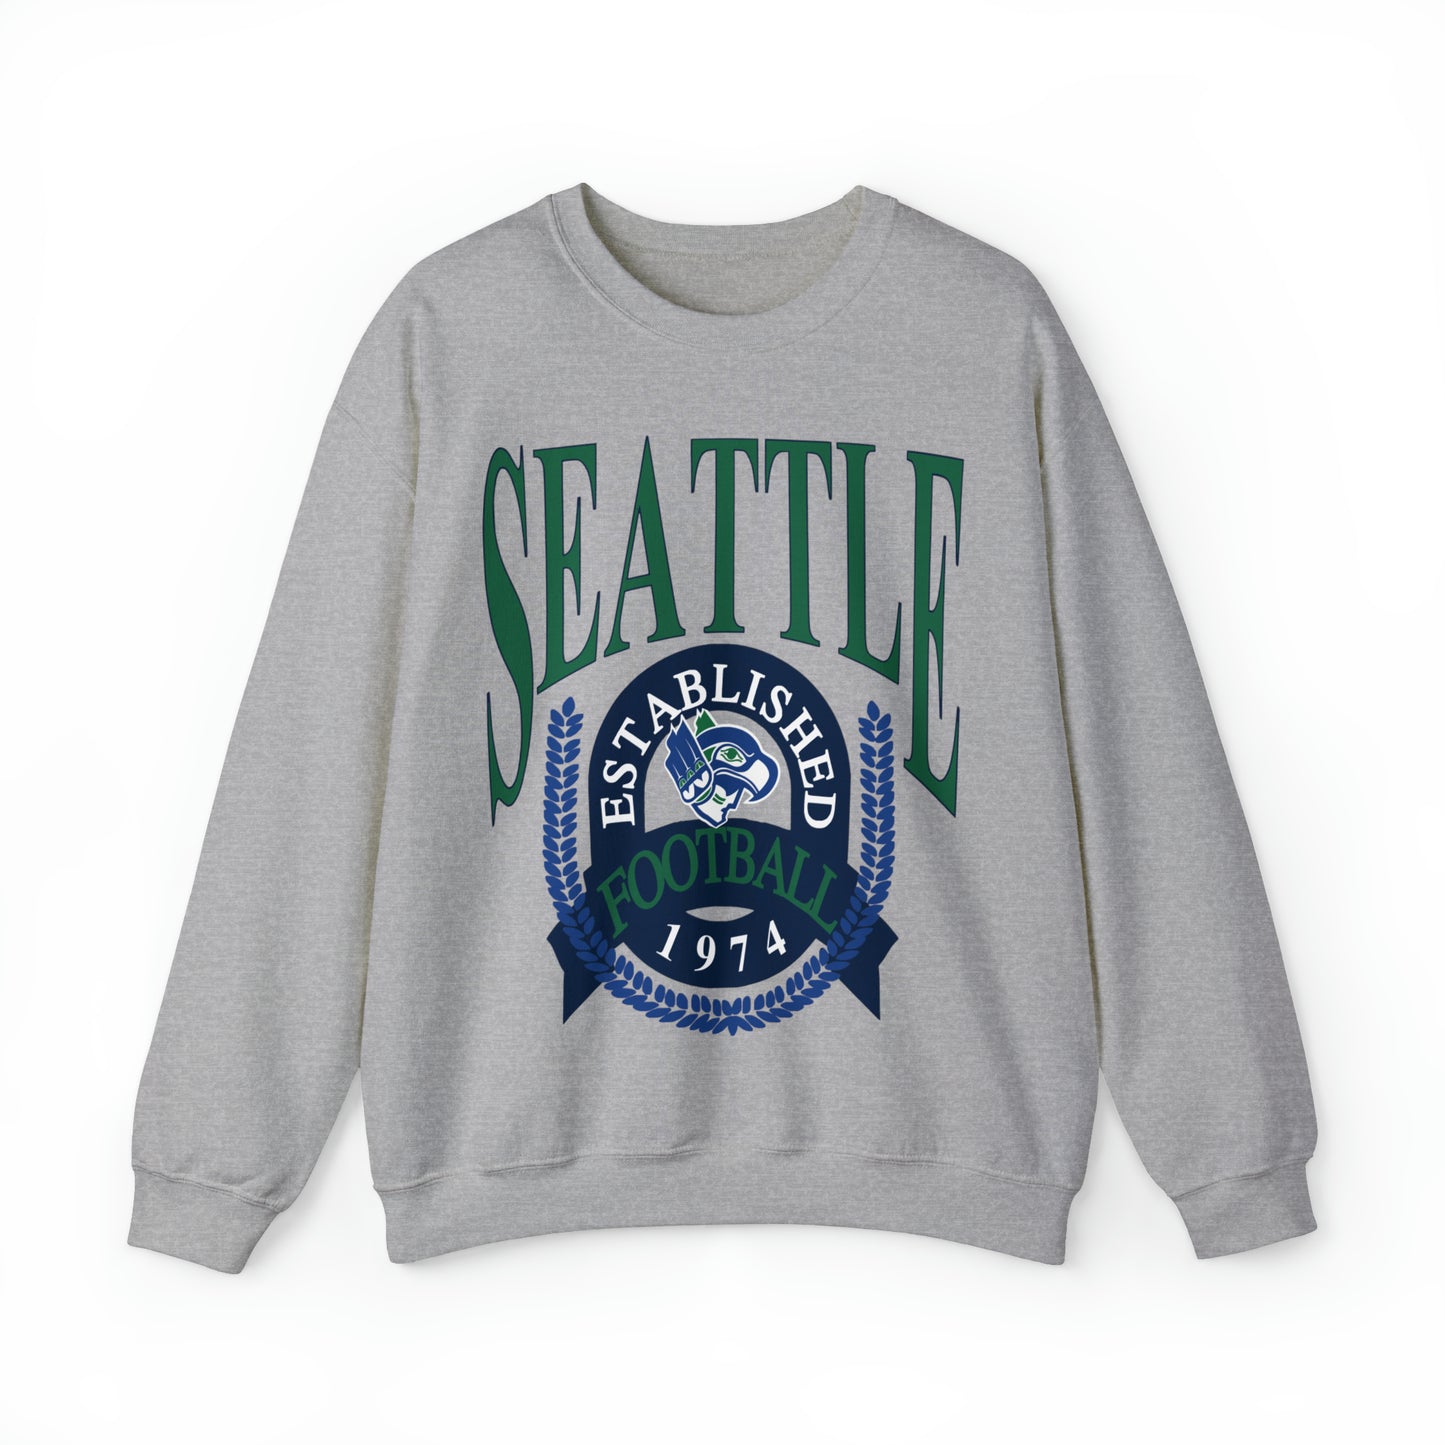 Throwback Vintage Seattle Seahawks Sweatshirt - Retro Style Football Crewneck - Men's & Women's Retro Apparel - Design 1